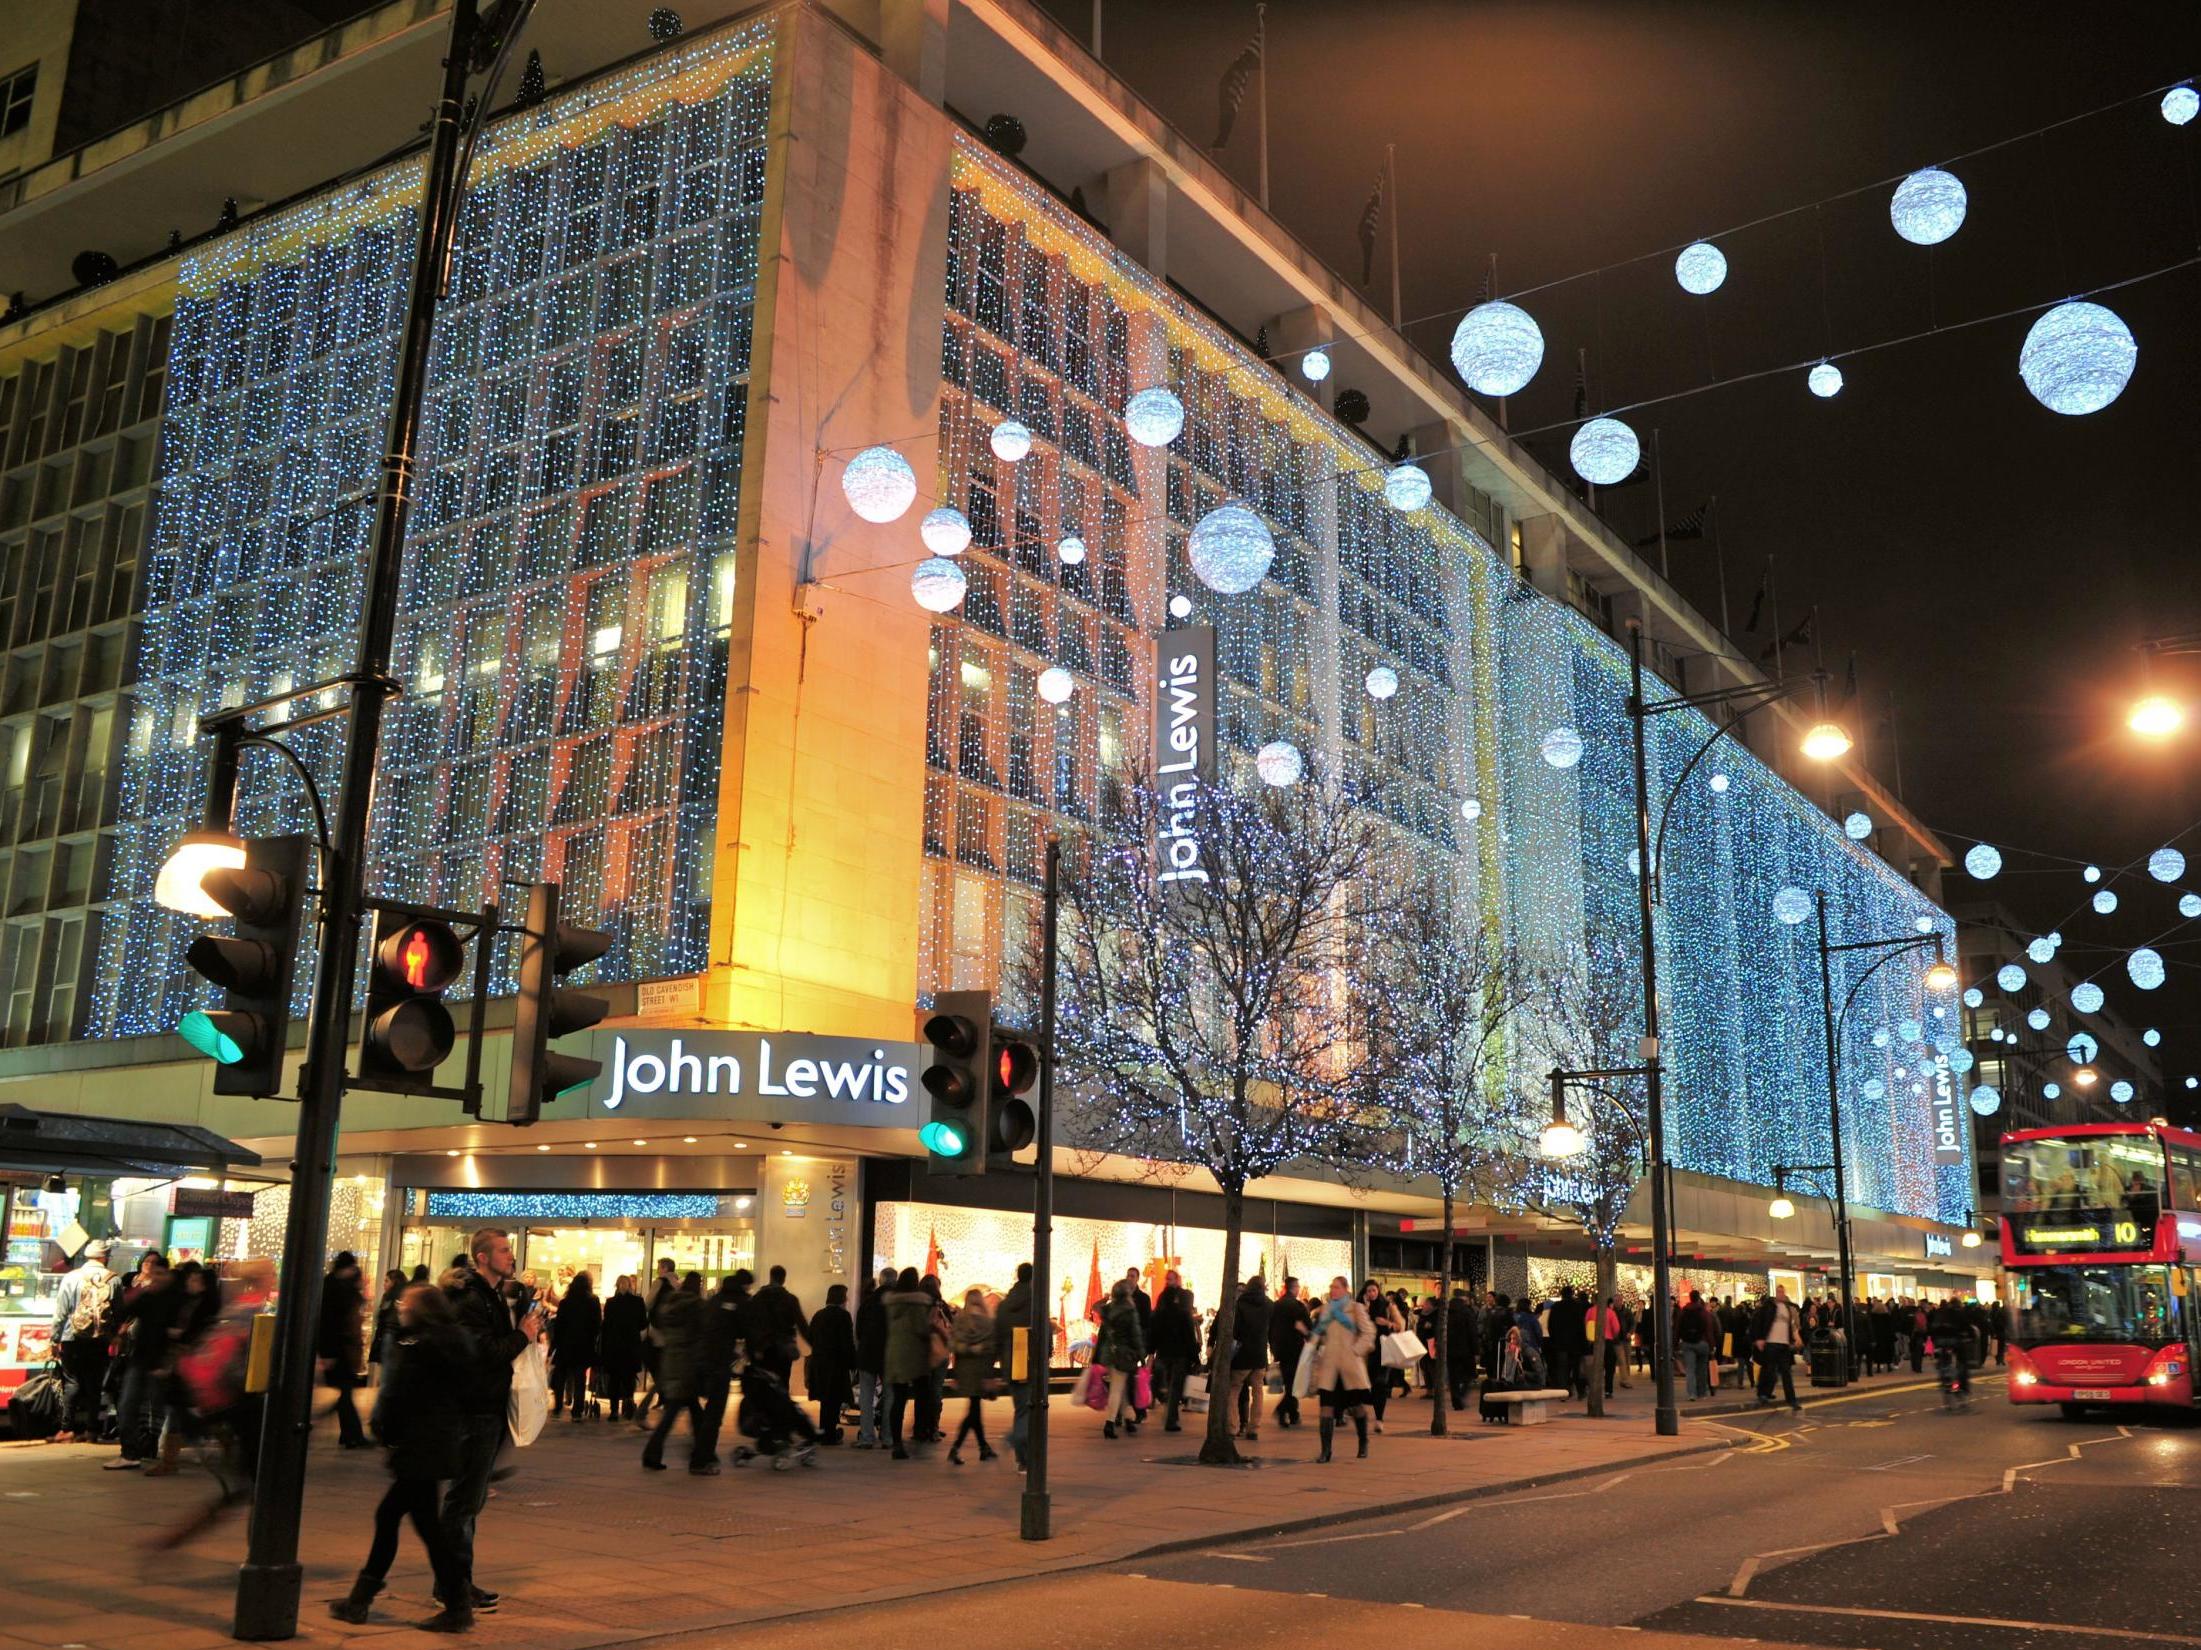 John Lewis department store, Oxford Street, London